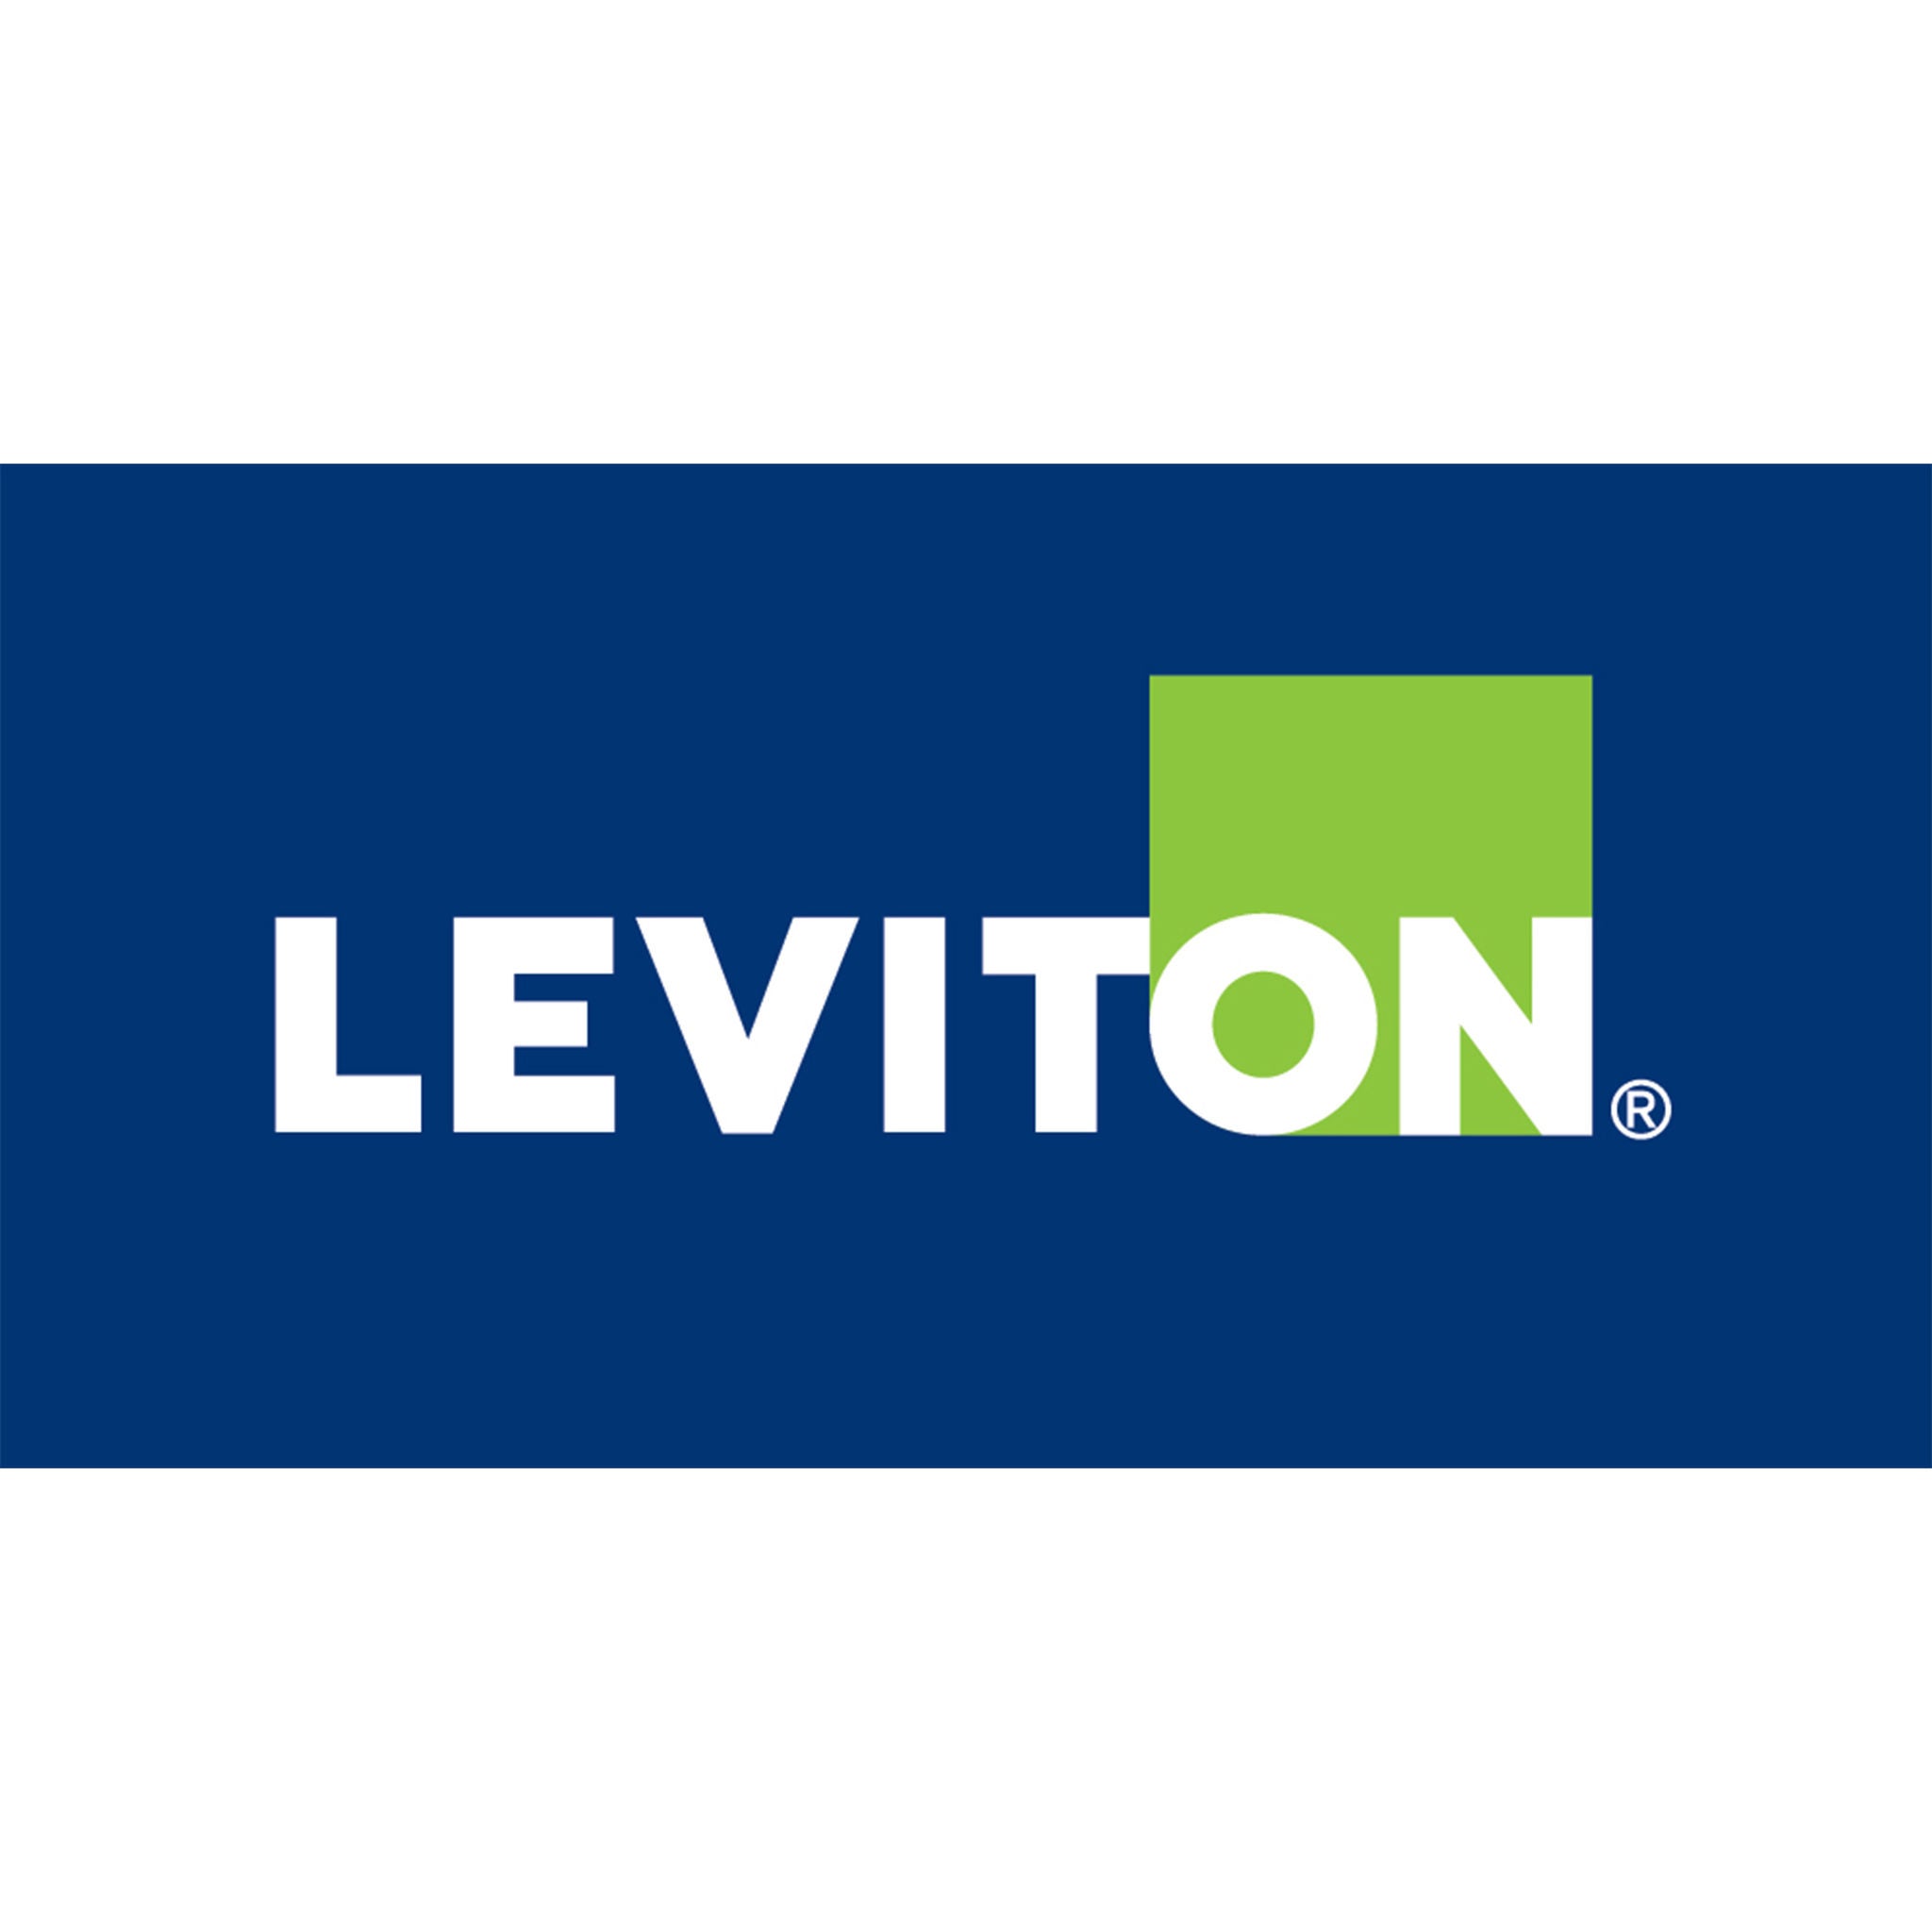 Leviton Reverse Logo